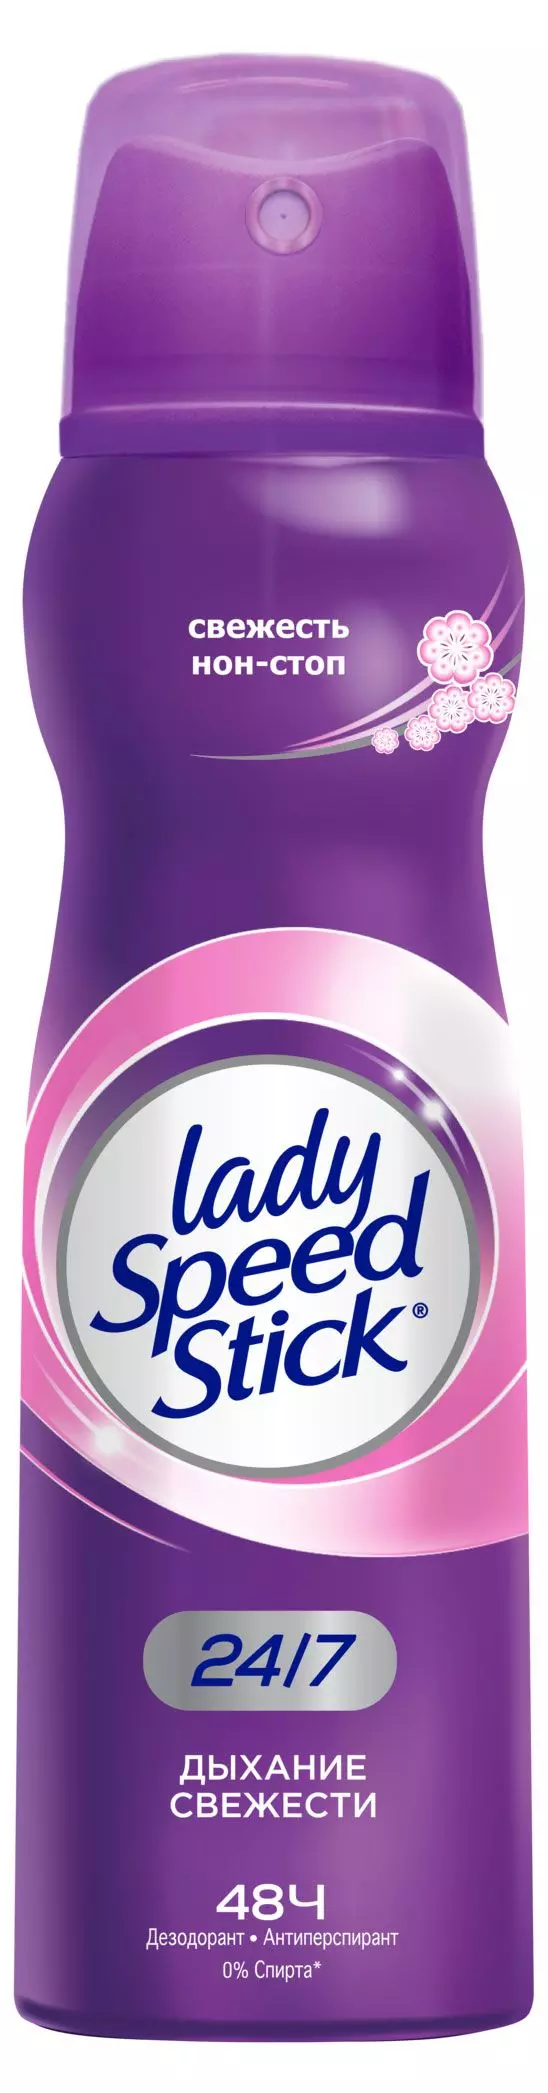 Дезодорант-антиперспирант Lady speed stick Спрей 24/7 Дыхание свежести 150мл женский